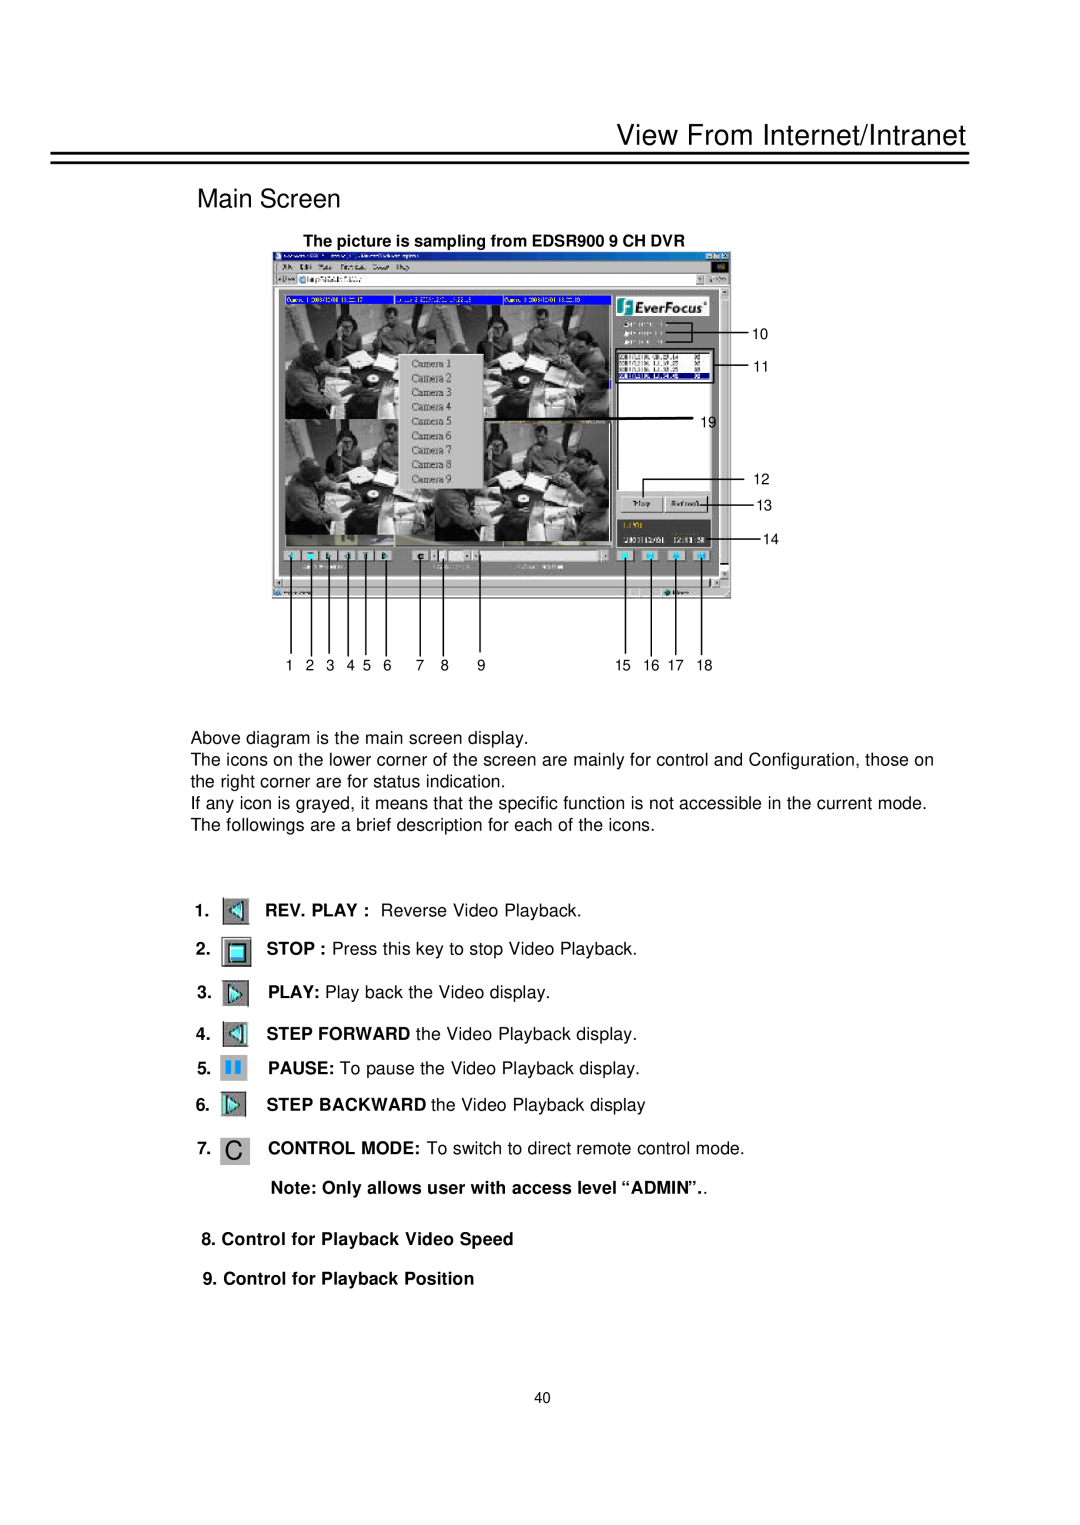 EverFocus EDSR-600, EDSR-400 instruction manual Main Screen, View From Internet/Intranet 